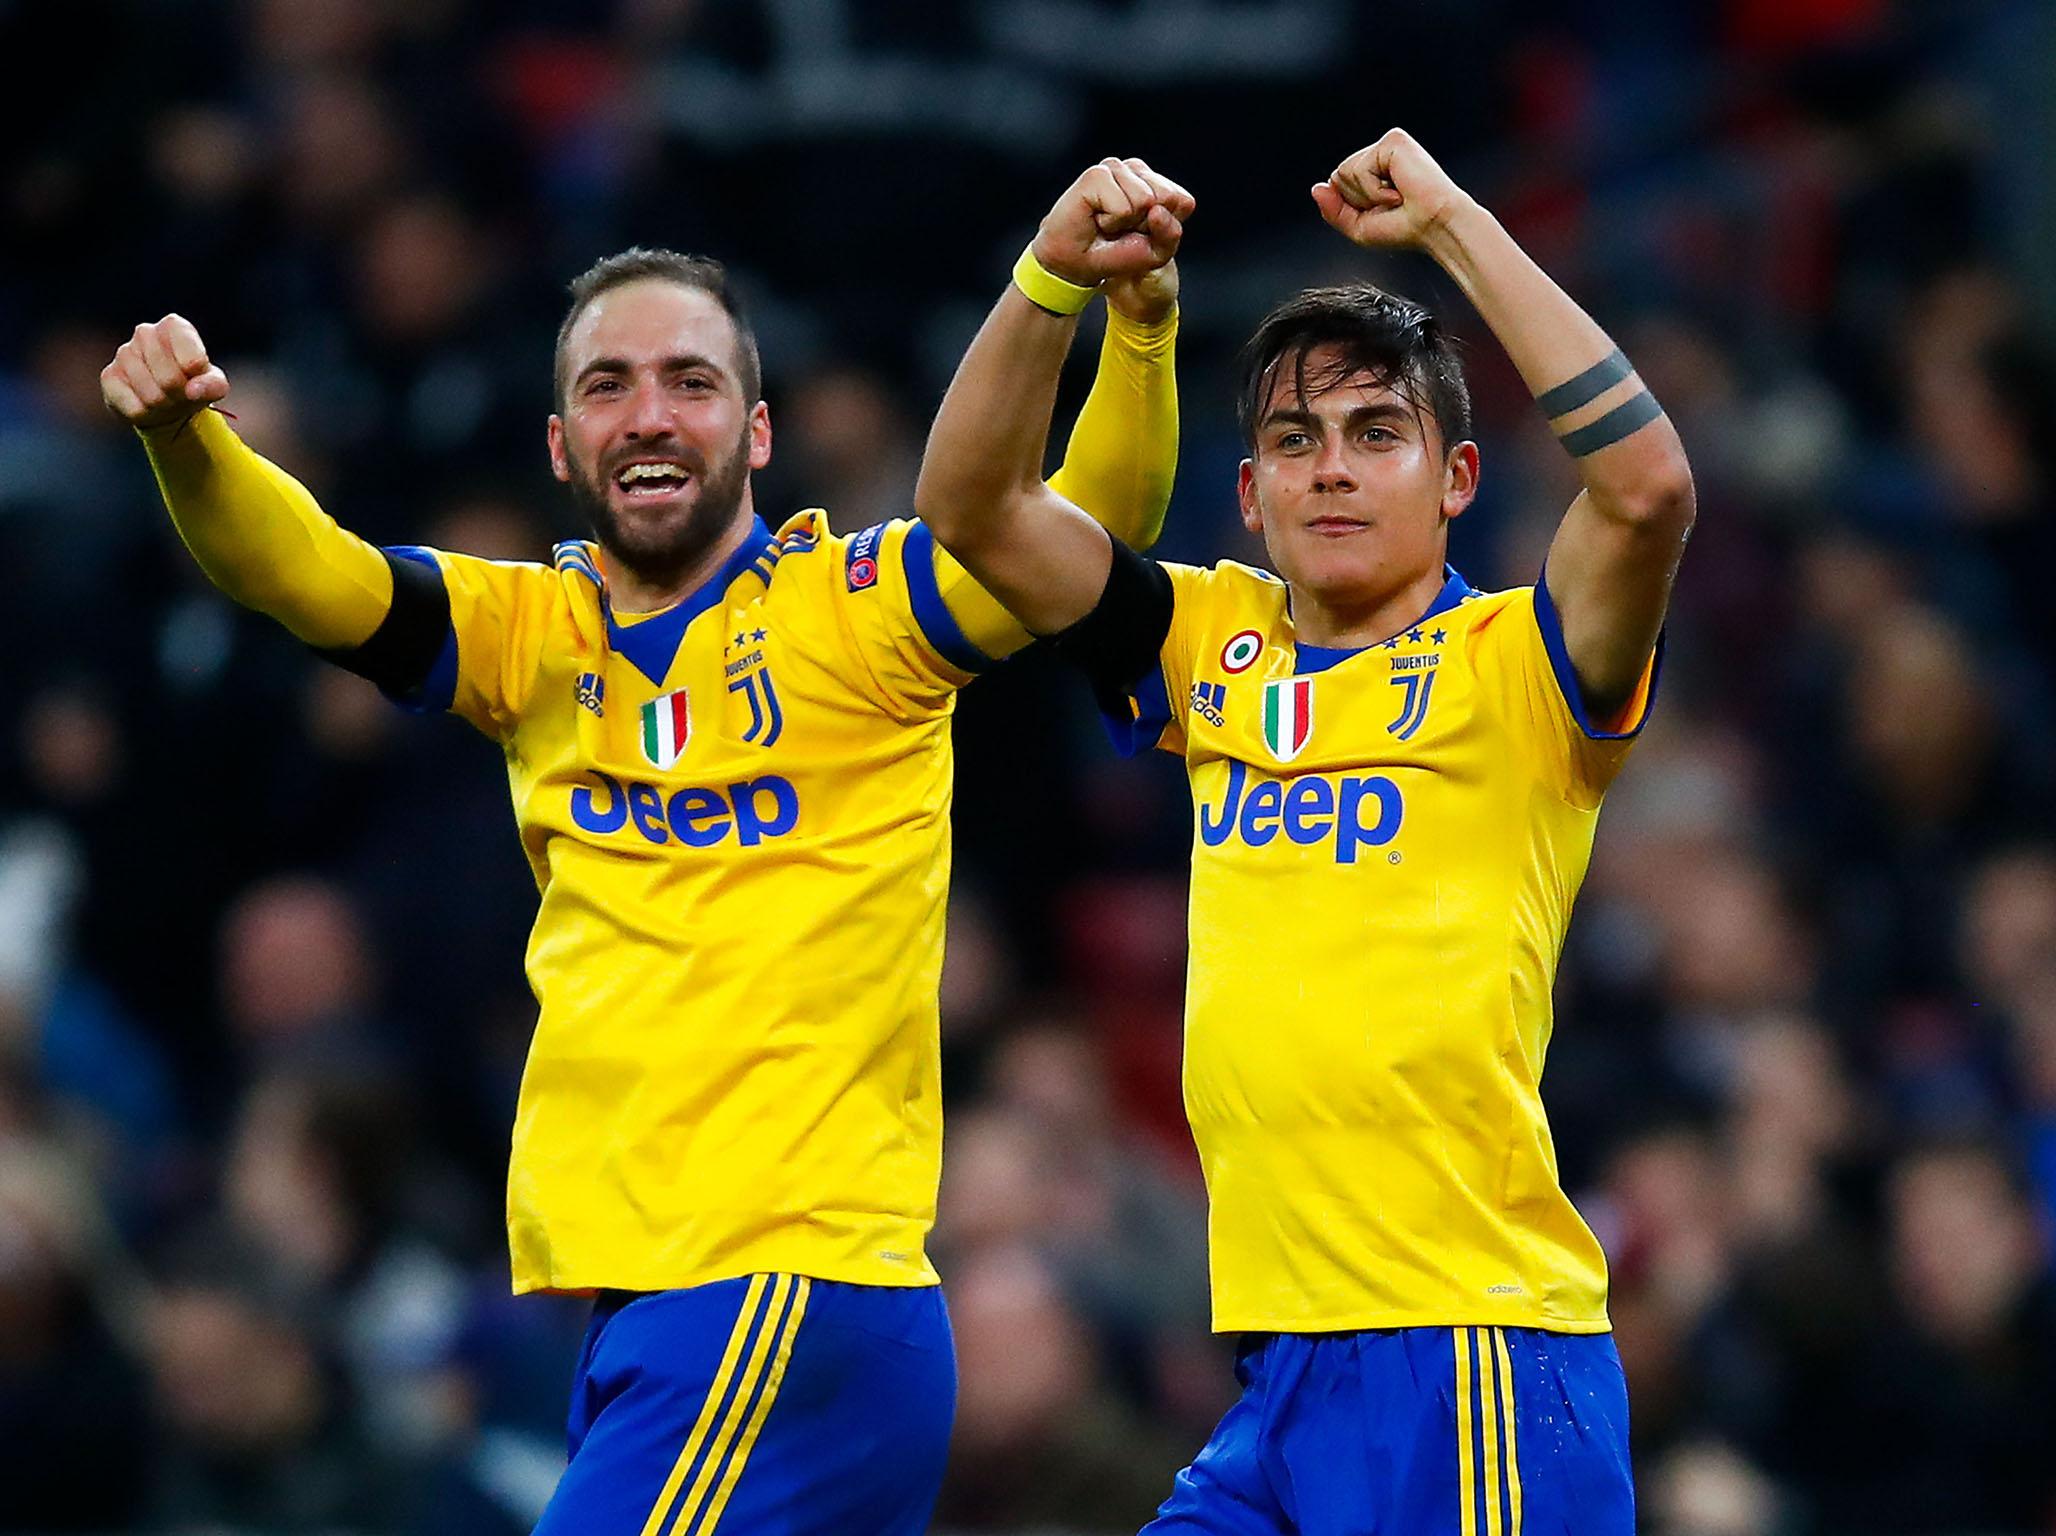 Juventus’s goalscorers Gonzalo Higuain and Paulo Dybala